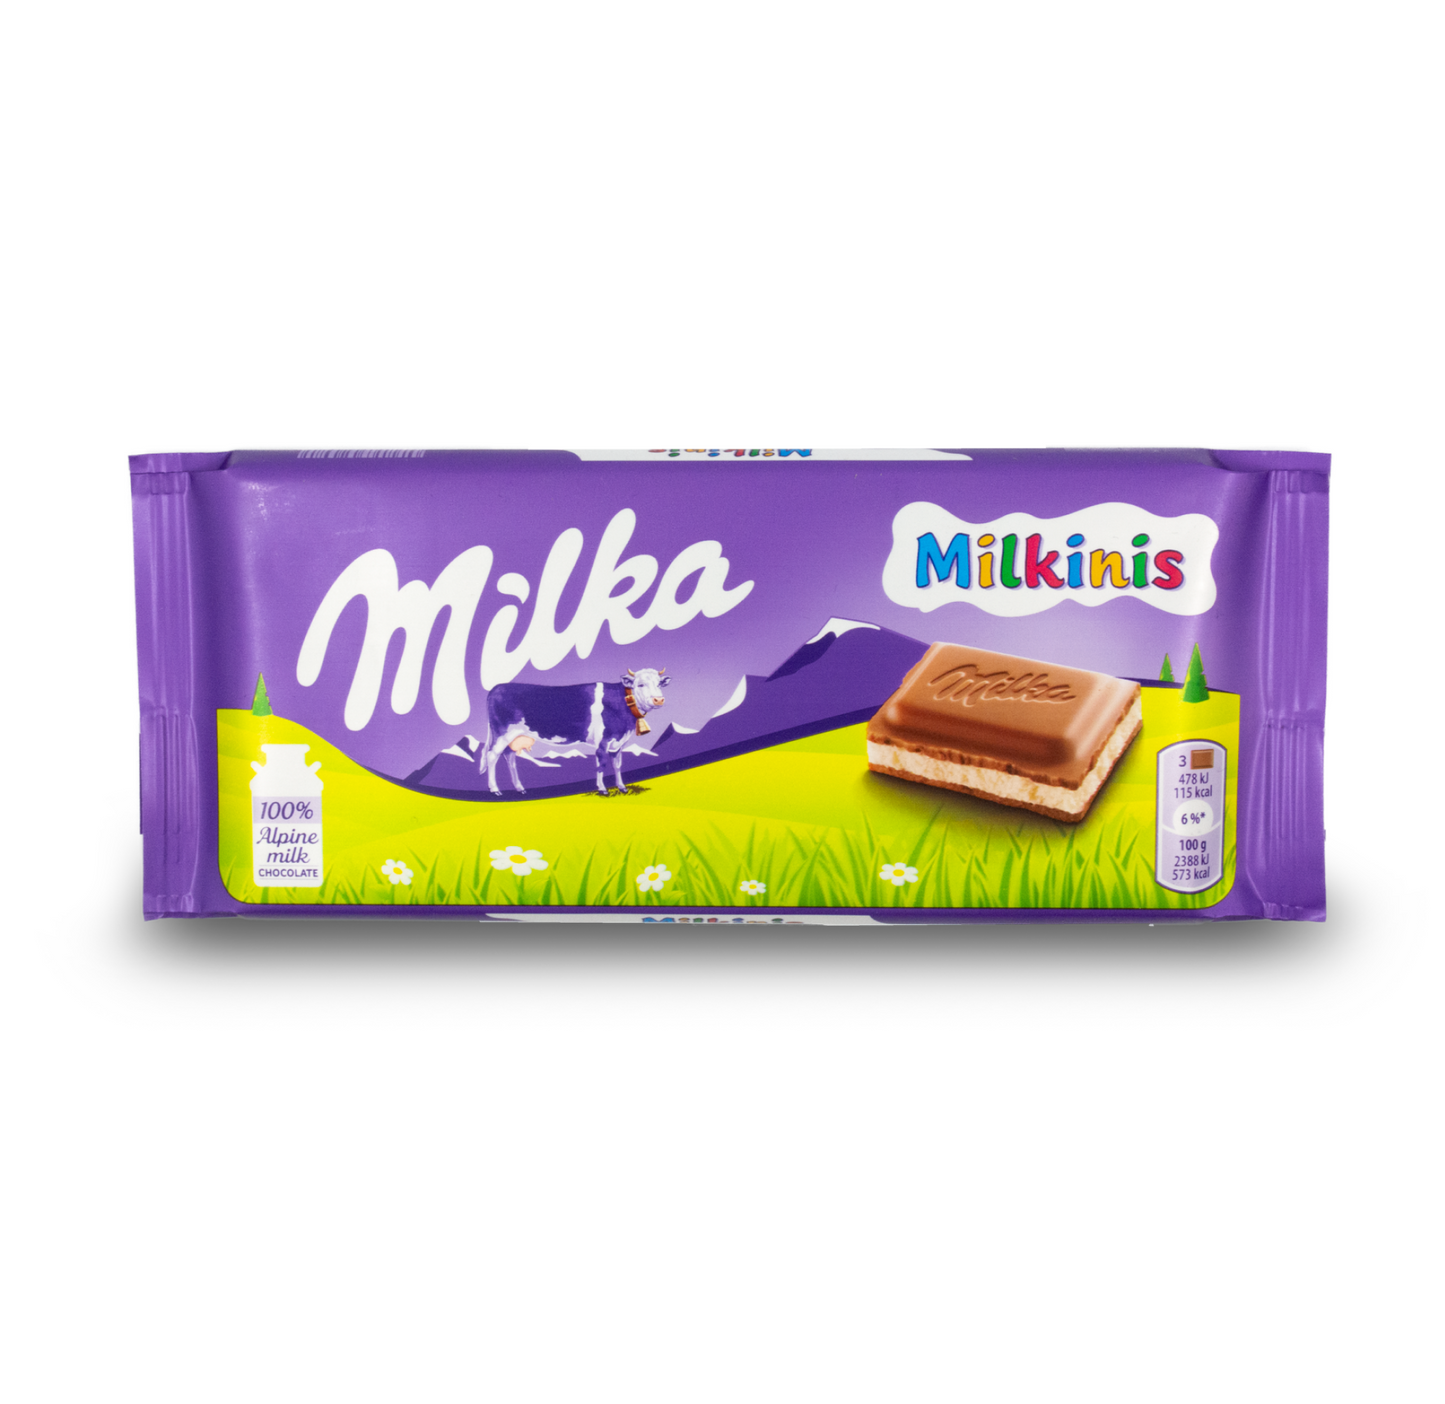 Milka Milkinis 87.5g